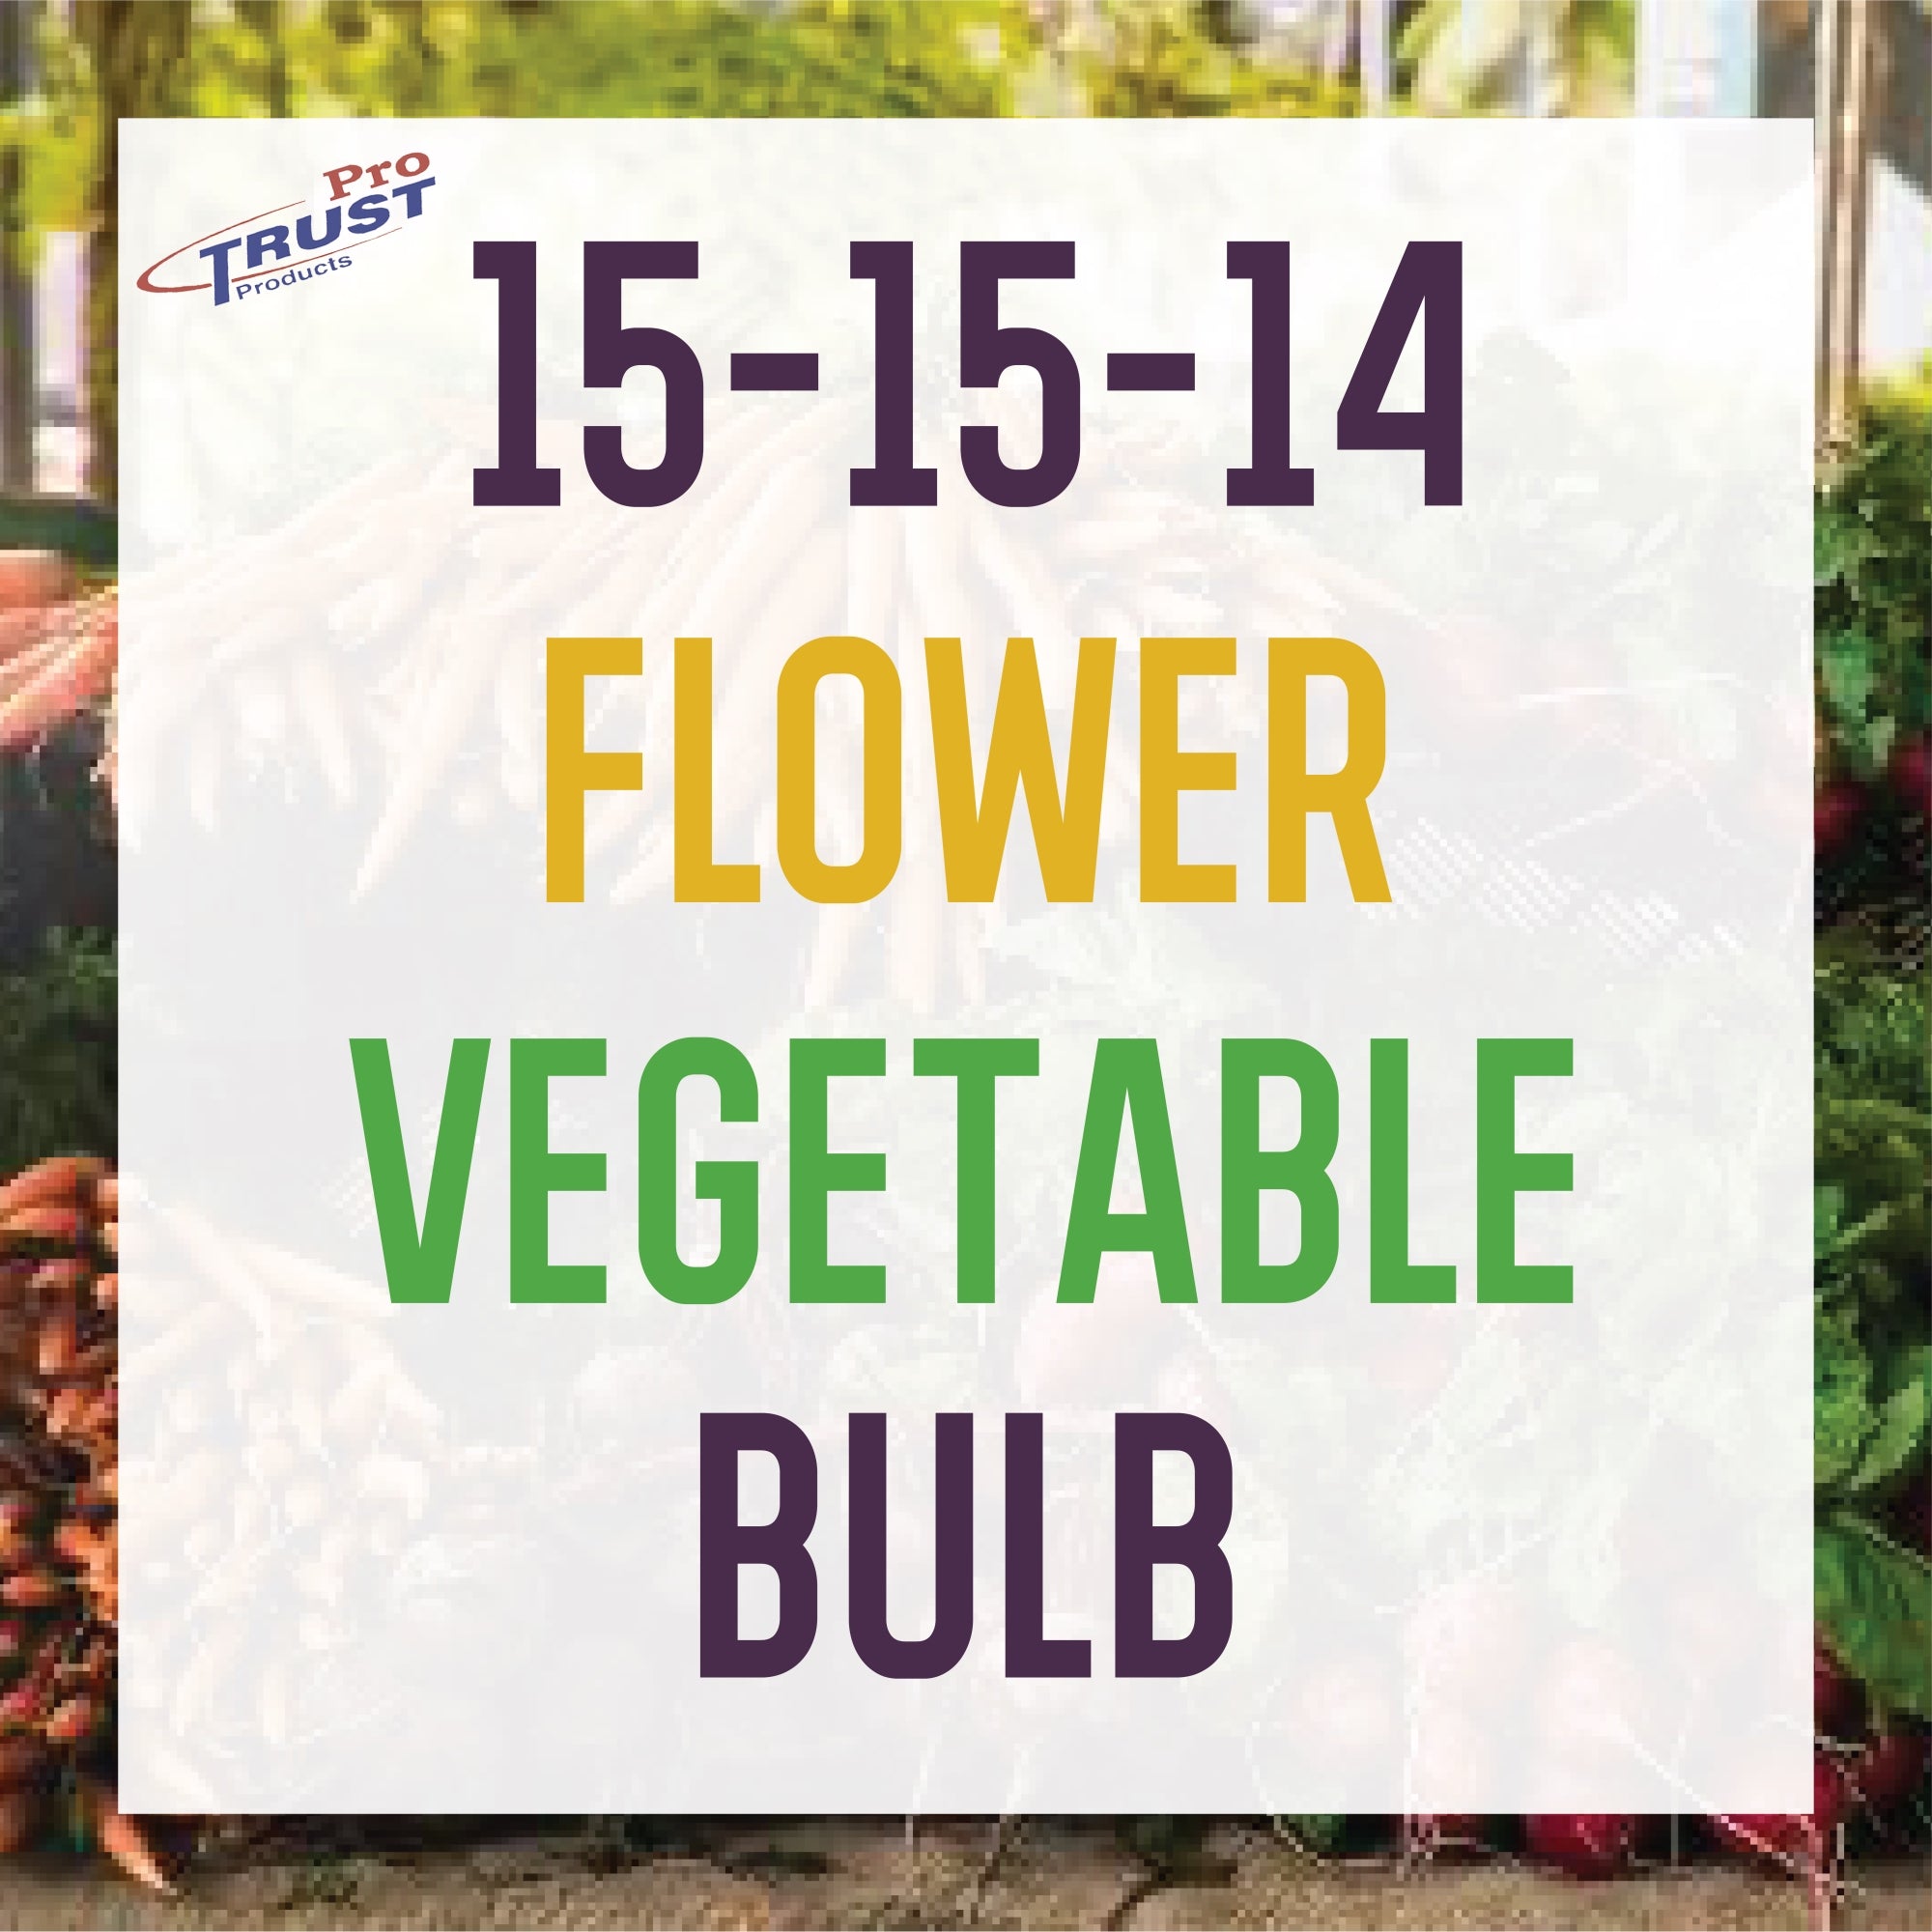 Garden Trust Flower & Vegetable Fertilizer - 4 Lb Bag